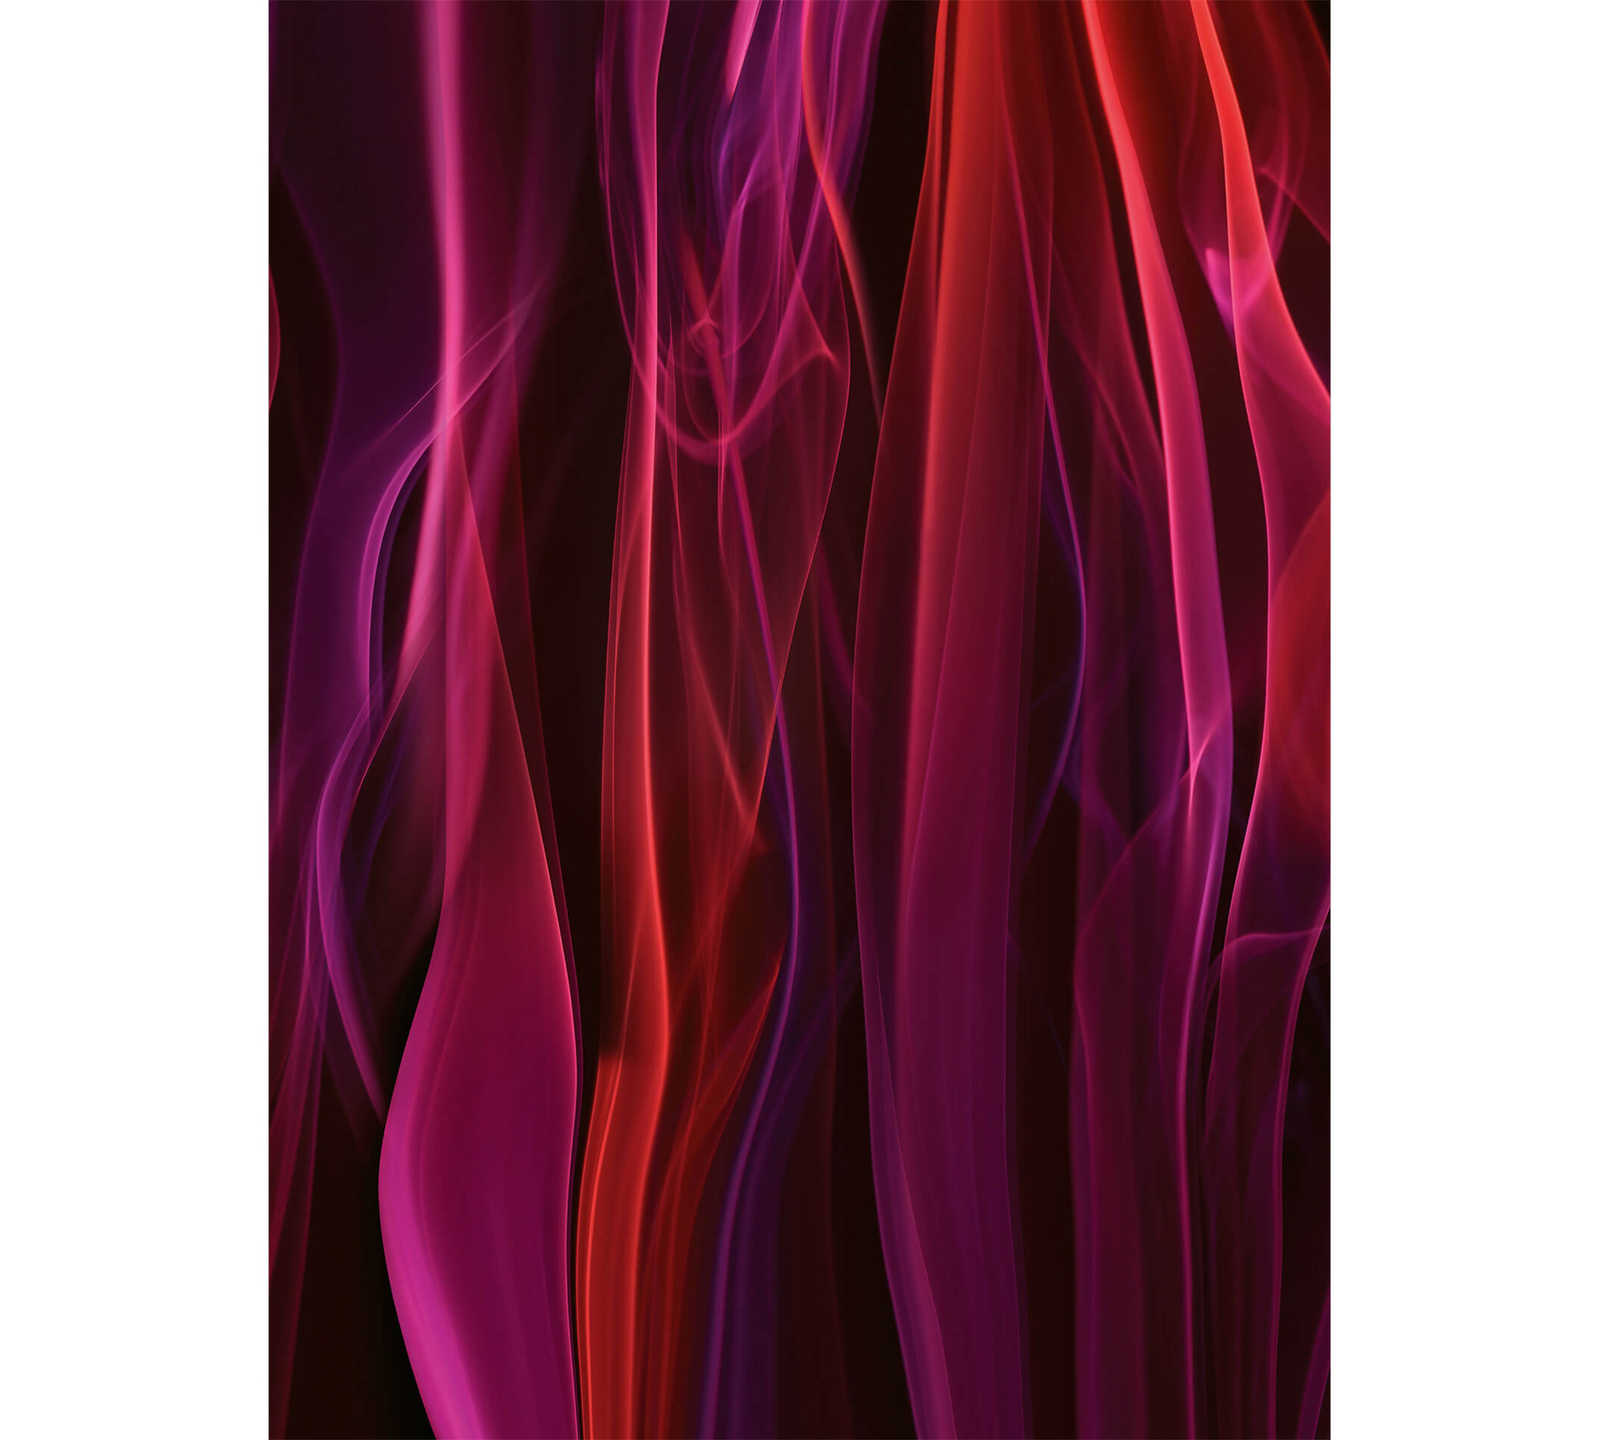         Photo wallpaper colourful smoke - red, purple, black
    